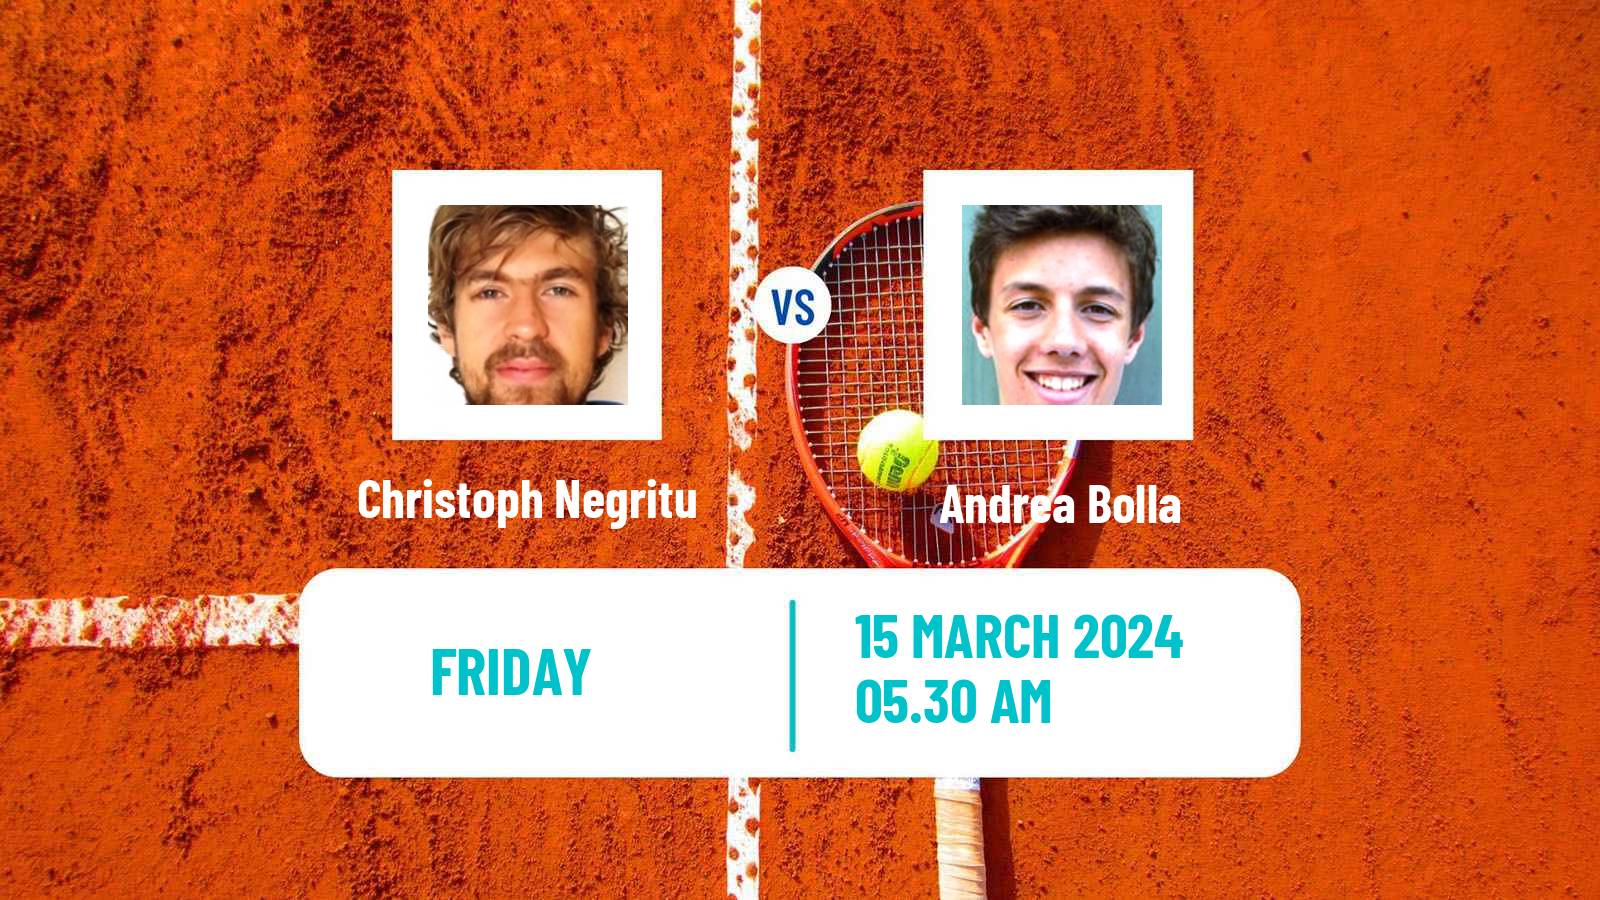 Tennis ITF M15 Monastir 11 Men Christoph Negritu - Andrea Bolla